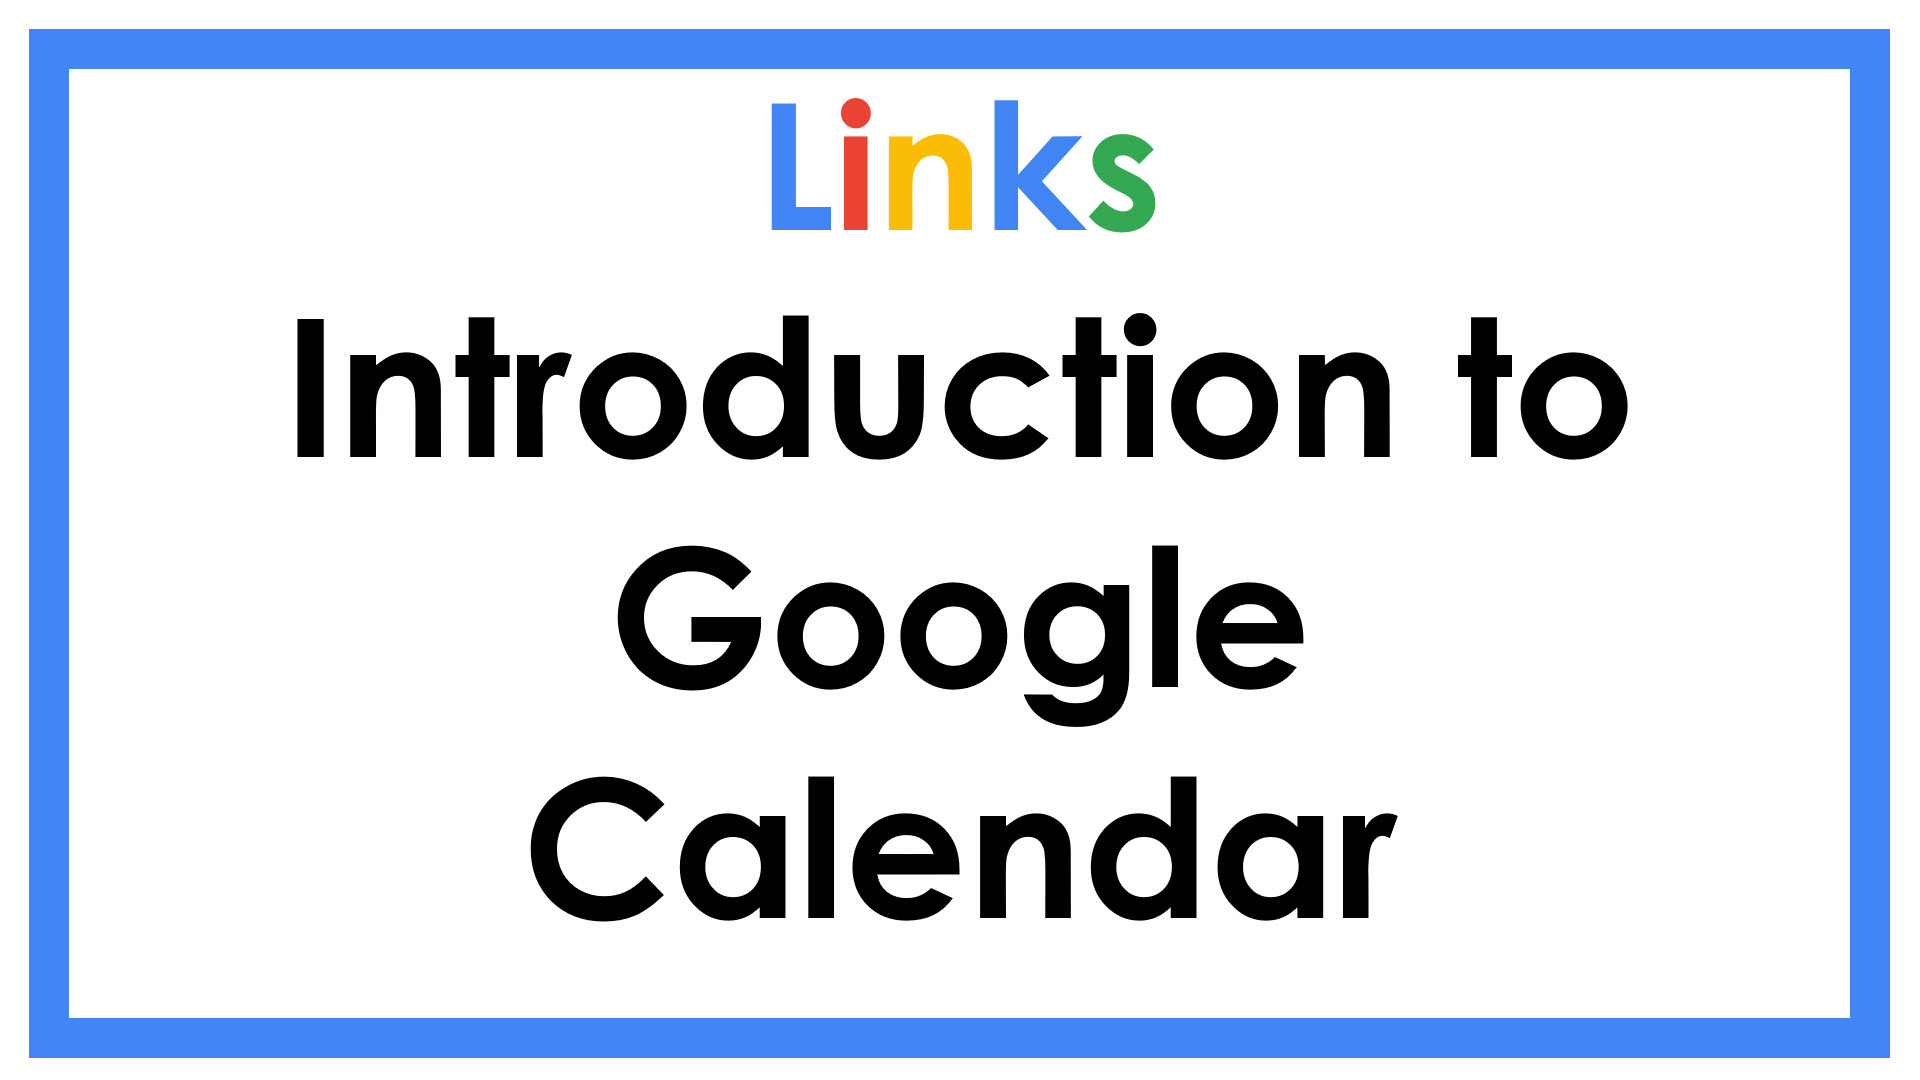 Links Introduction to Google Calendar